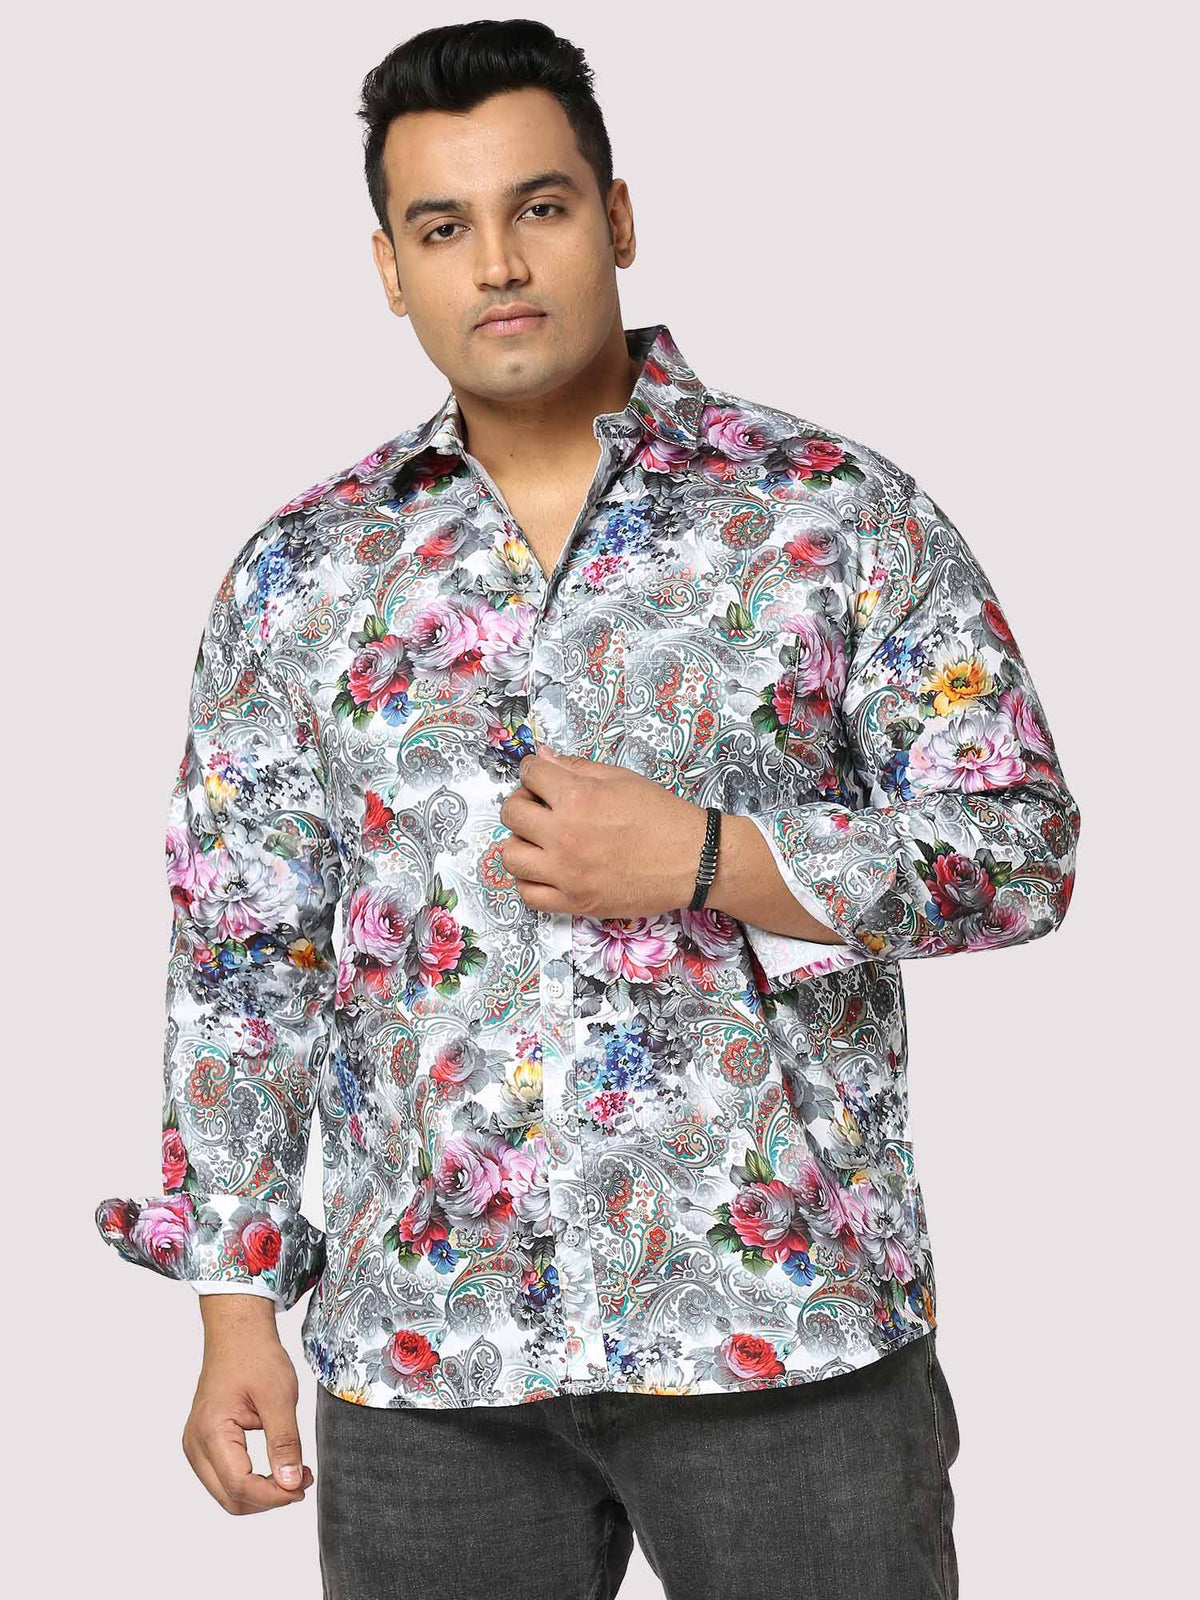 Floral Fusion Digital Printed Full Sleeve Men's Plus Size - Guniaa Fashions